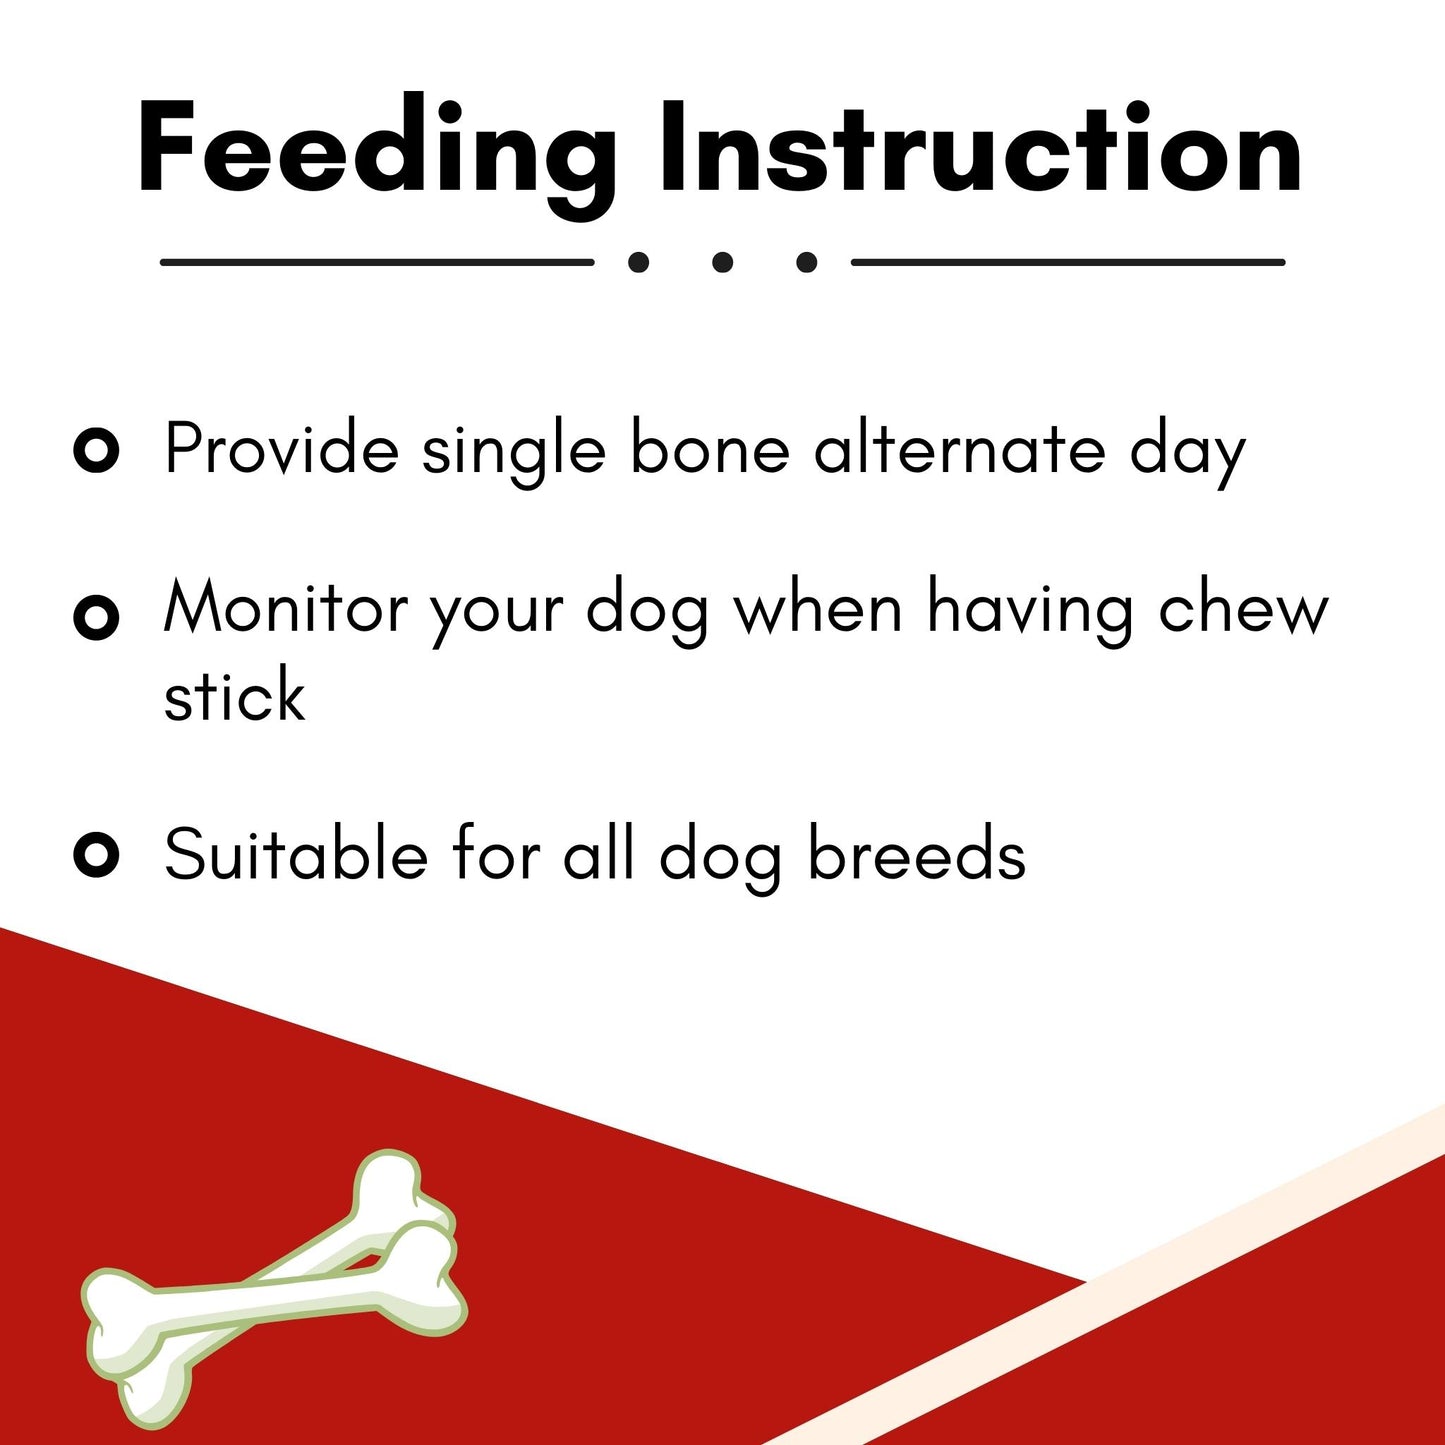 Foodie Puppies Chompsters Rawhide Bone for Dogs - 2inch Bone, 3Kg